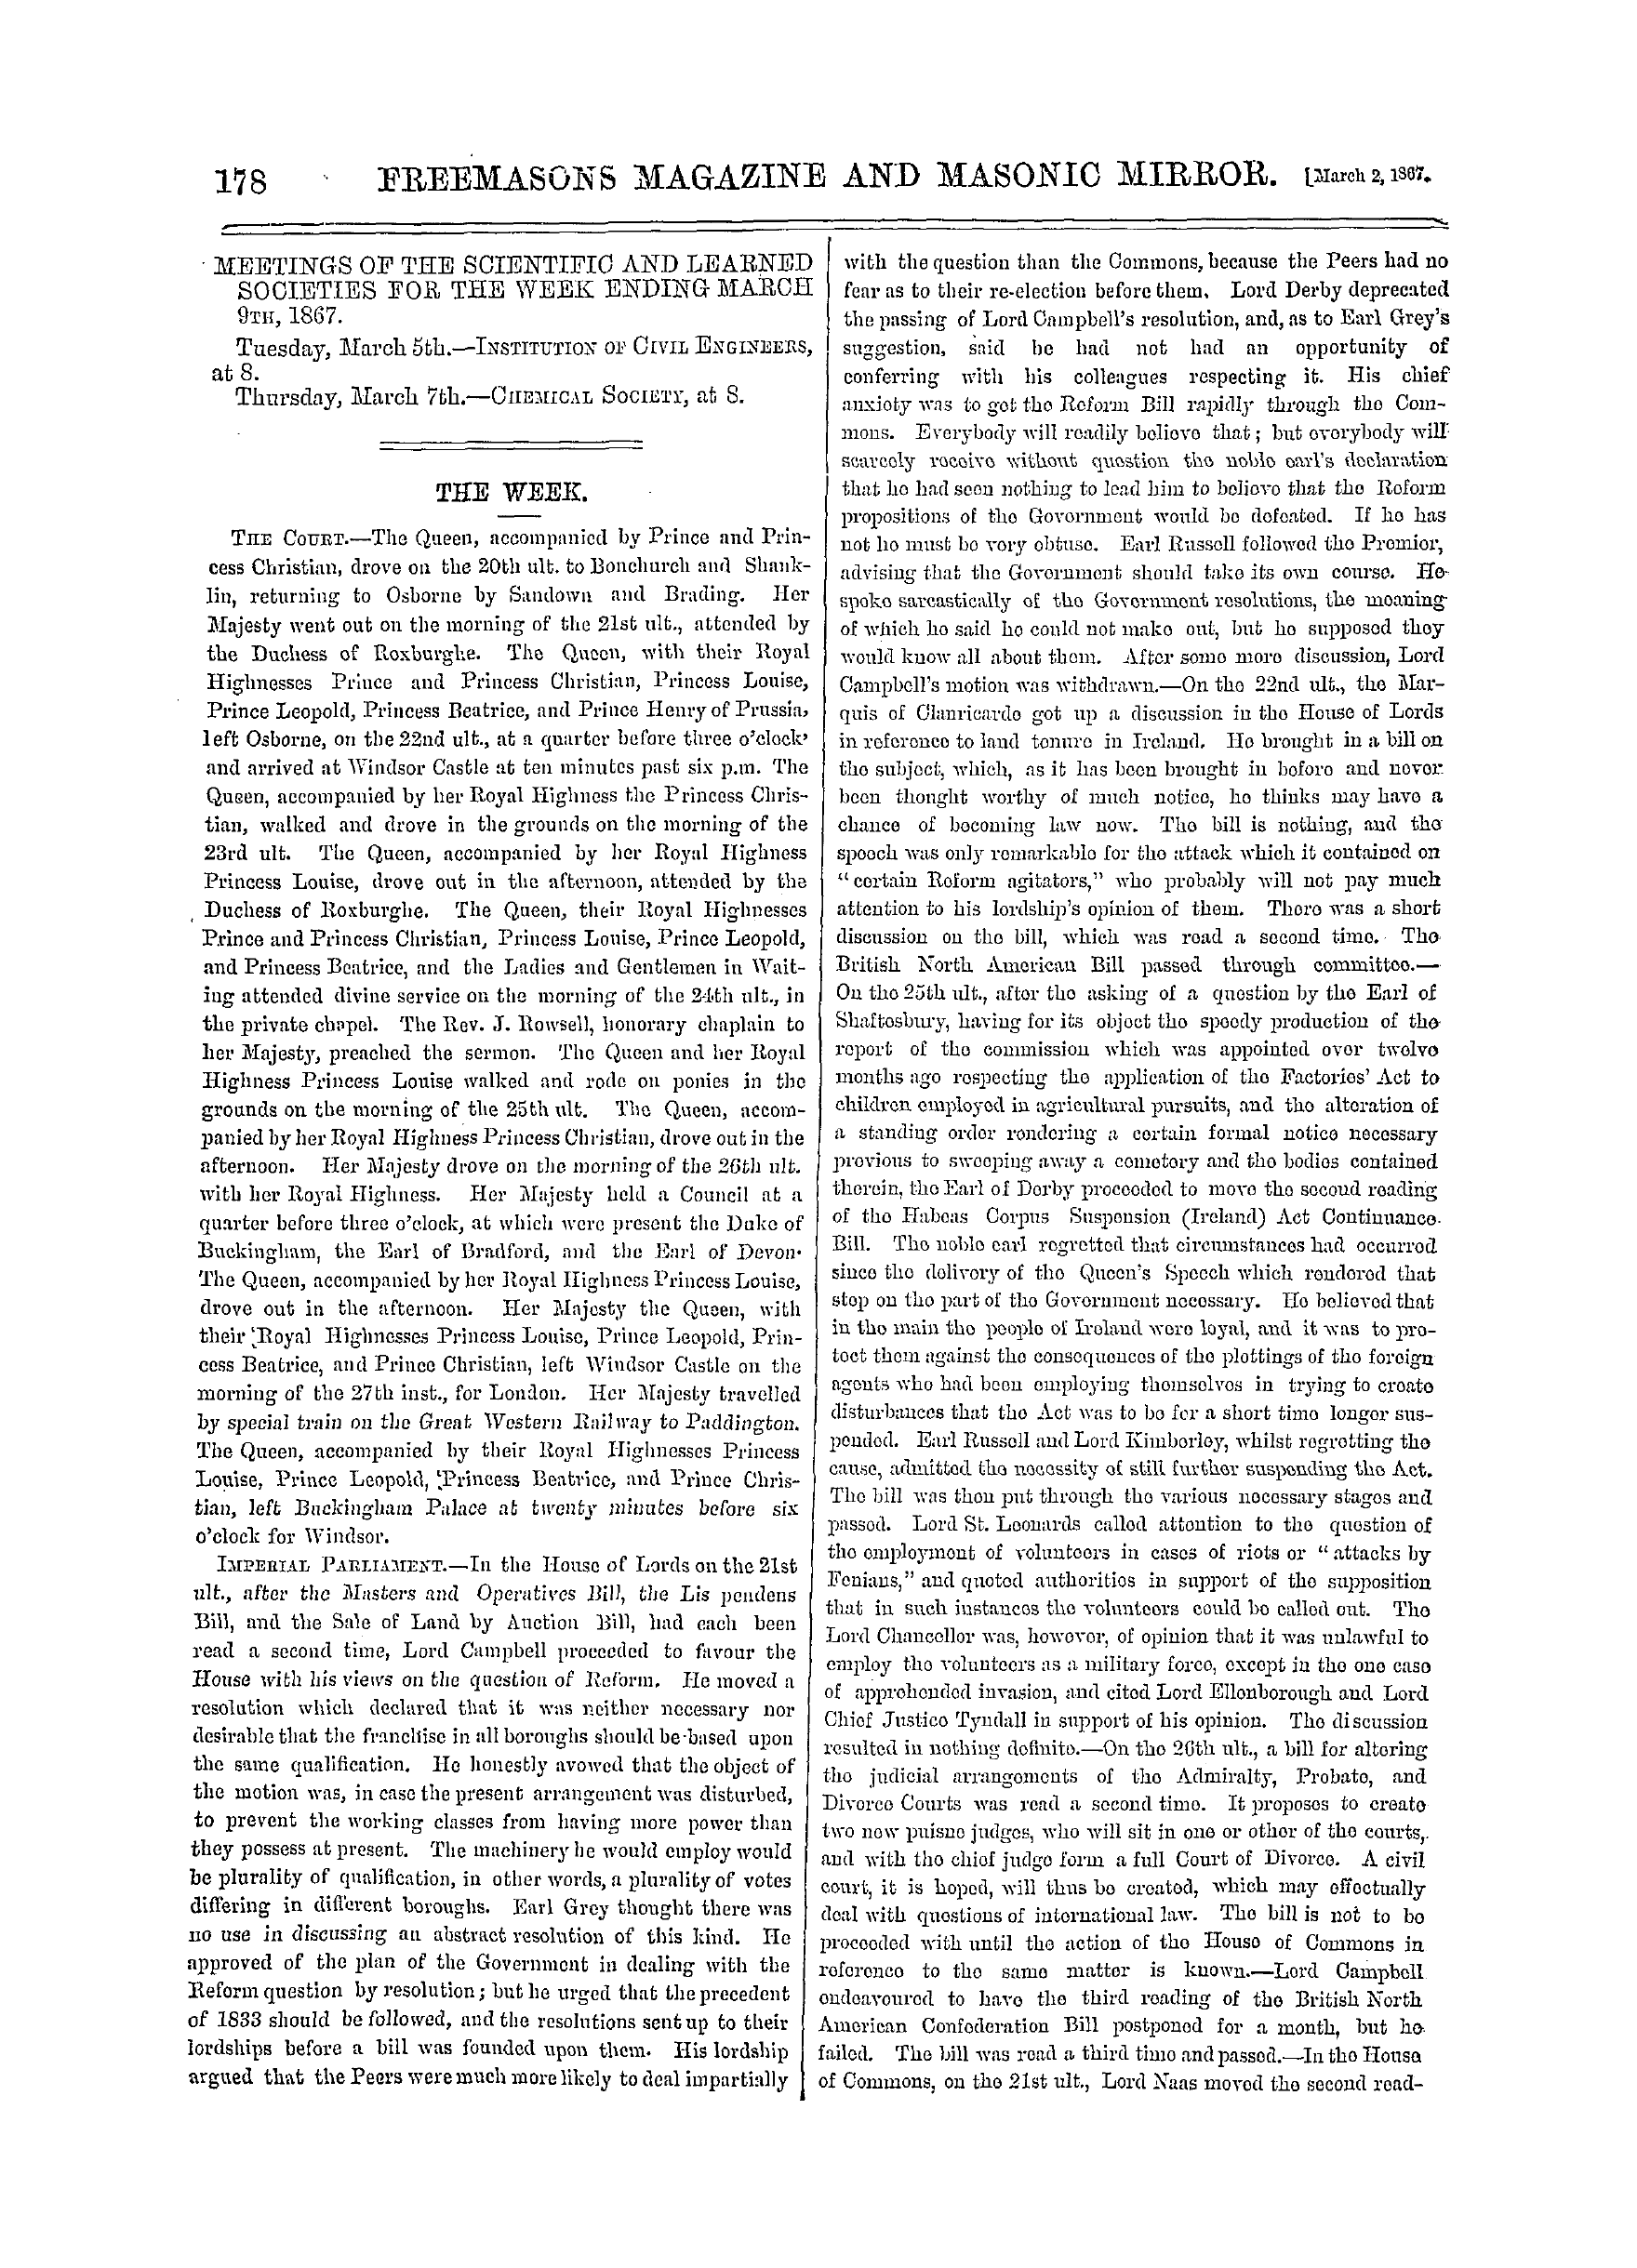 The Freemasons' Monthly Magazine: 1867-03-02 - The Week.